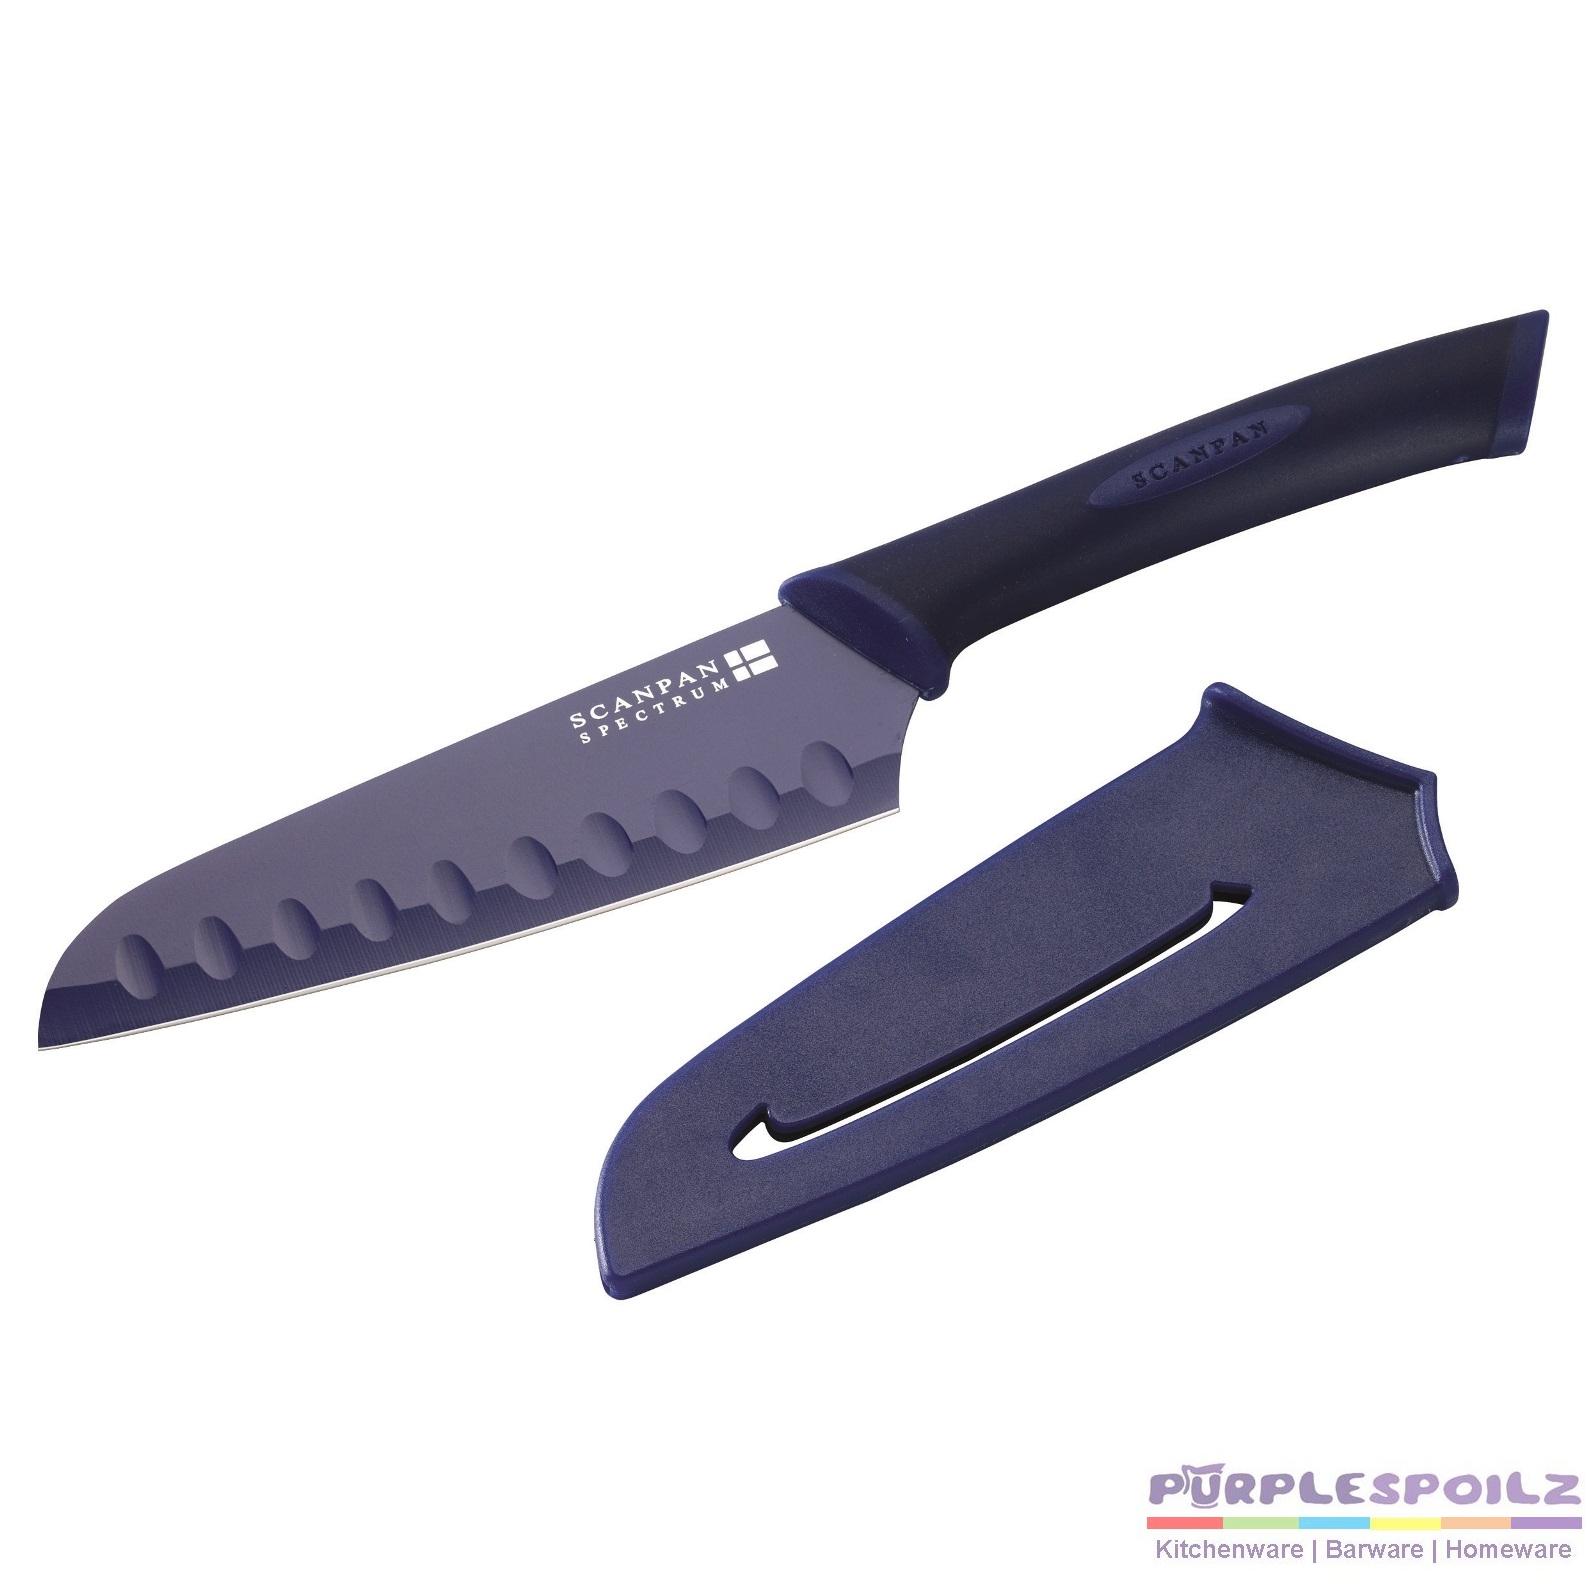 NEW SCANPAN SPECTRUM 14cm SANTOKU KNIFE Japanese Knive Cut Cutting 8 ...